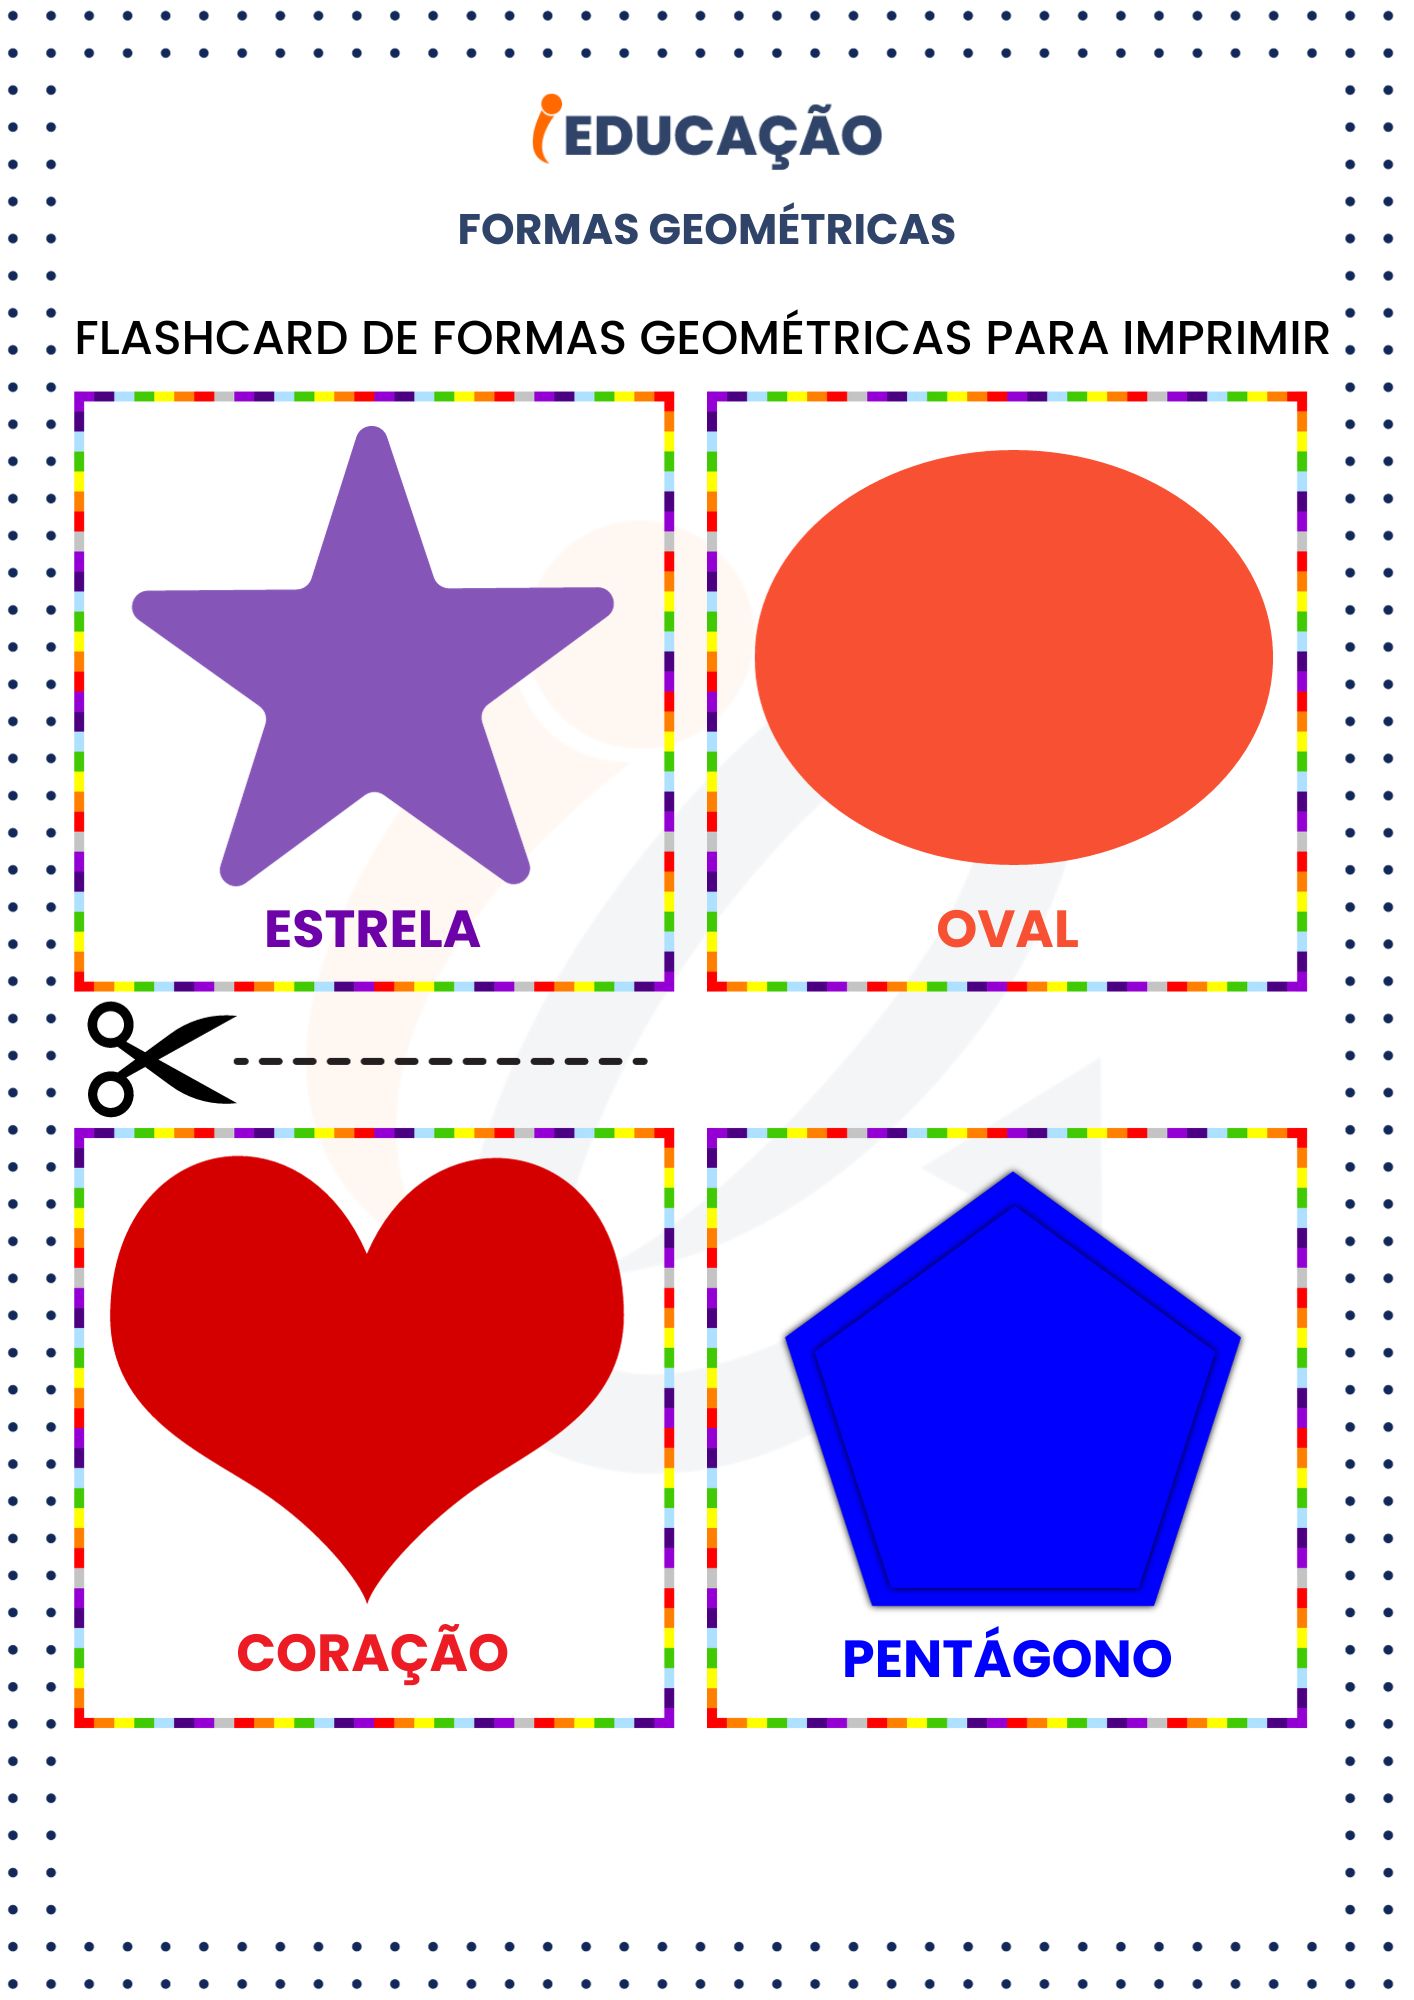 Atividade formas geométricas_ Flashcard de formas geométricas para imprimir (2)